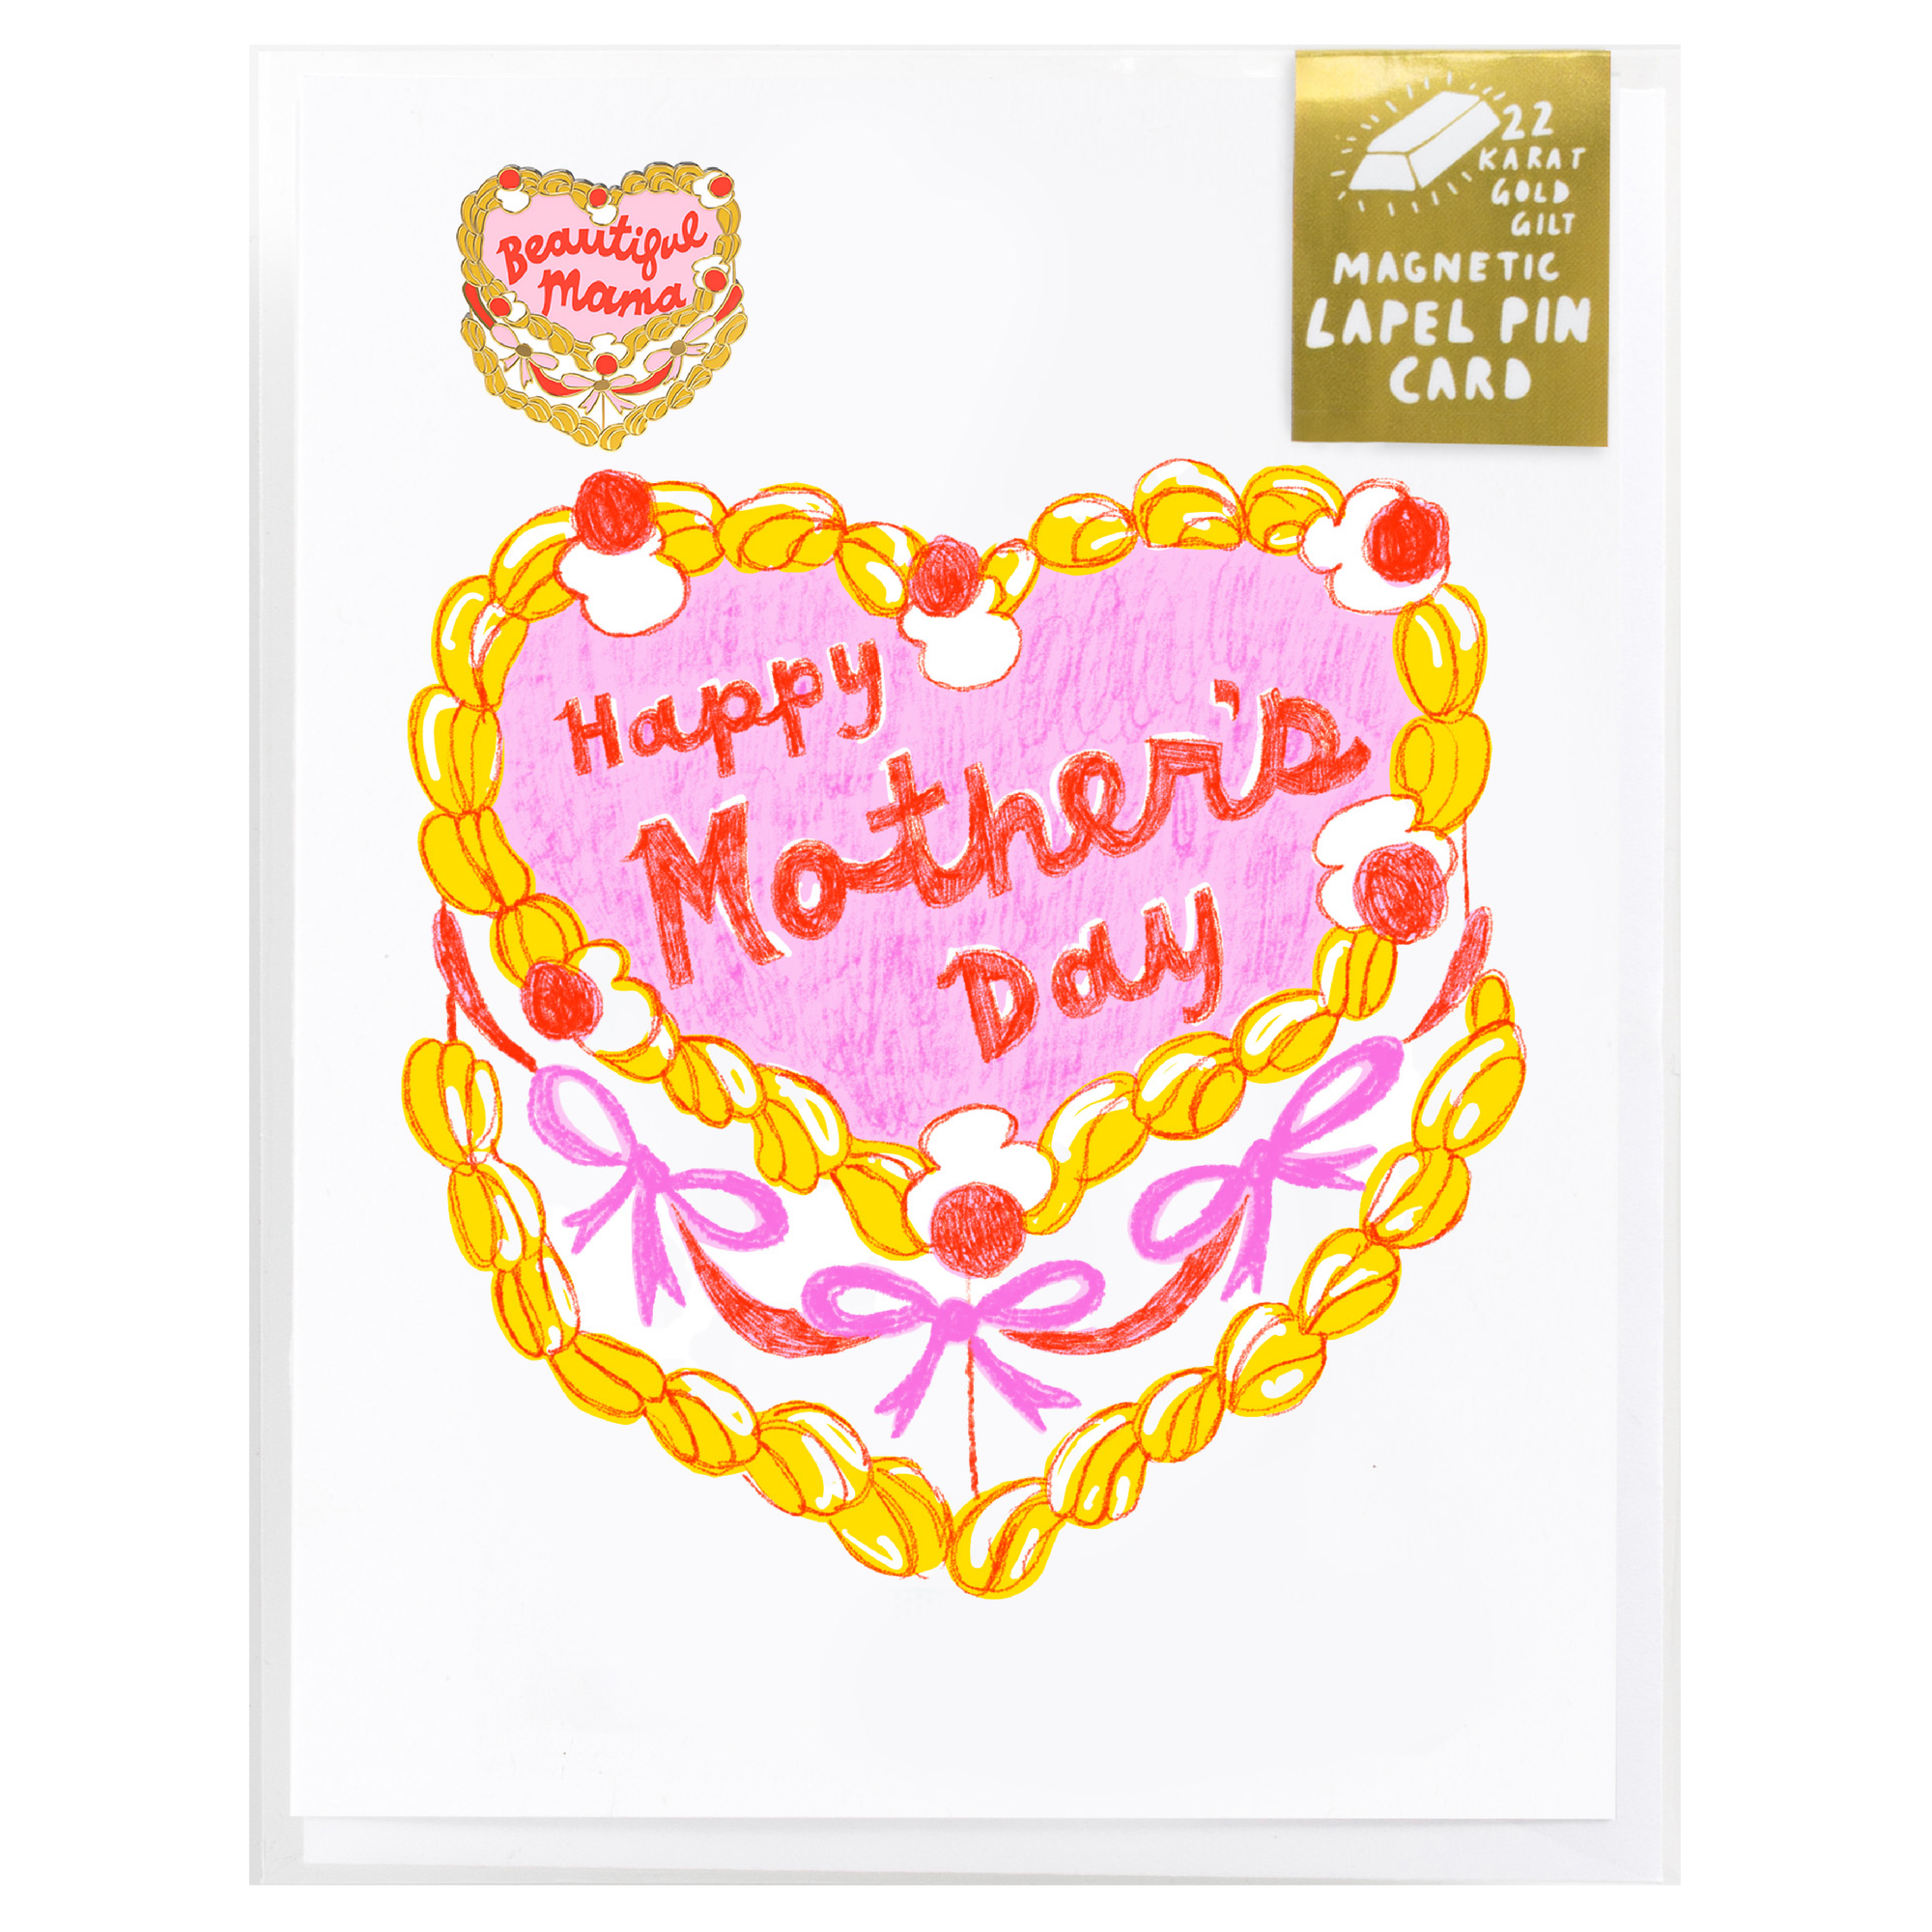 Happy Mama's Day Cake - Lapel Pin Card